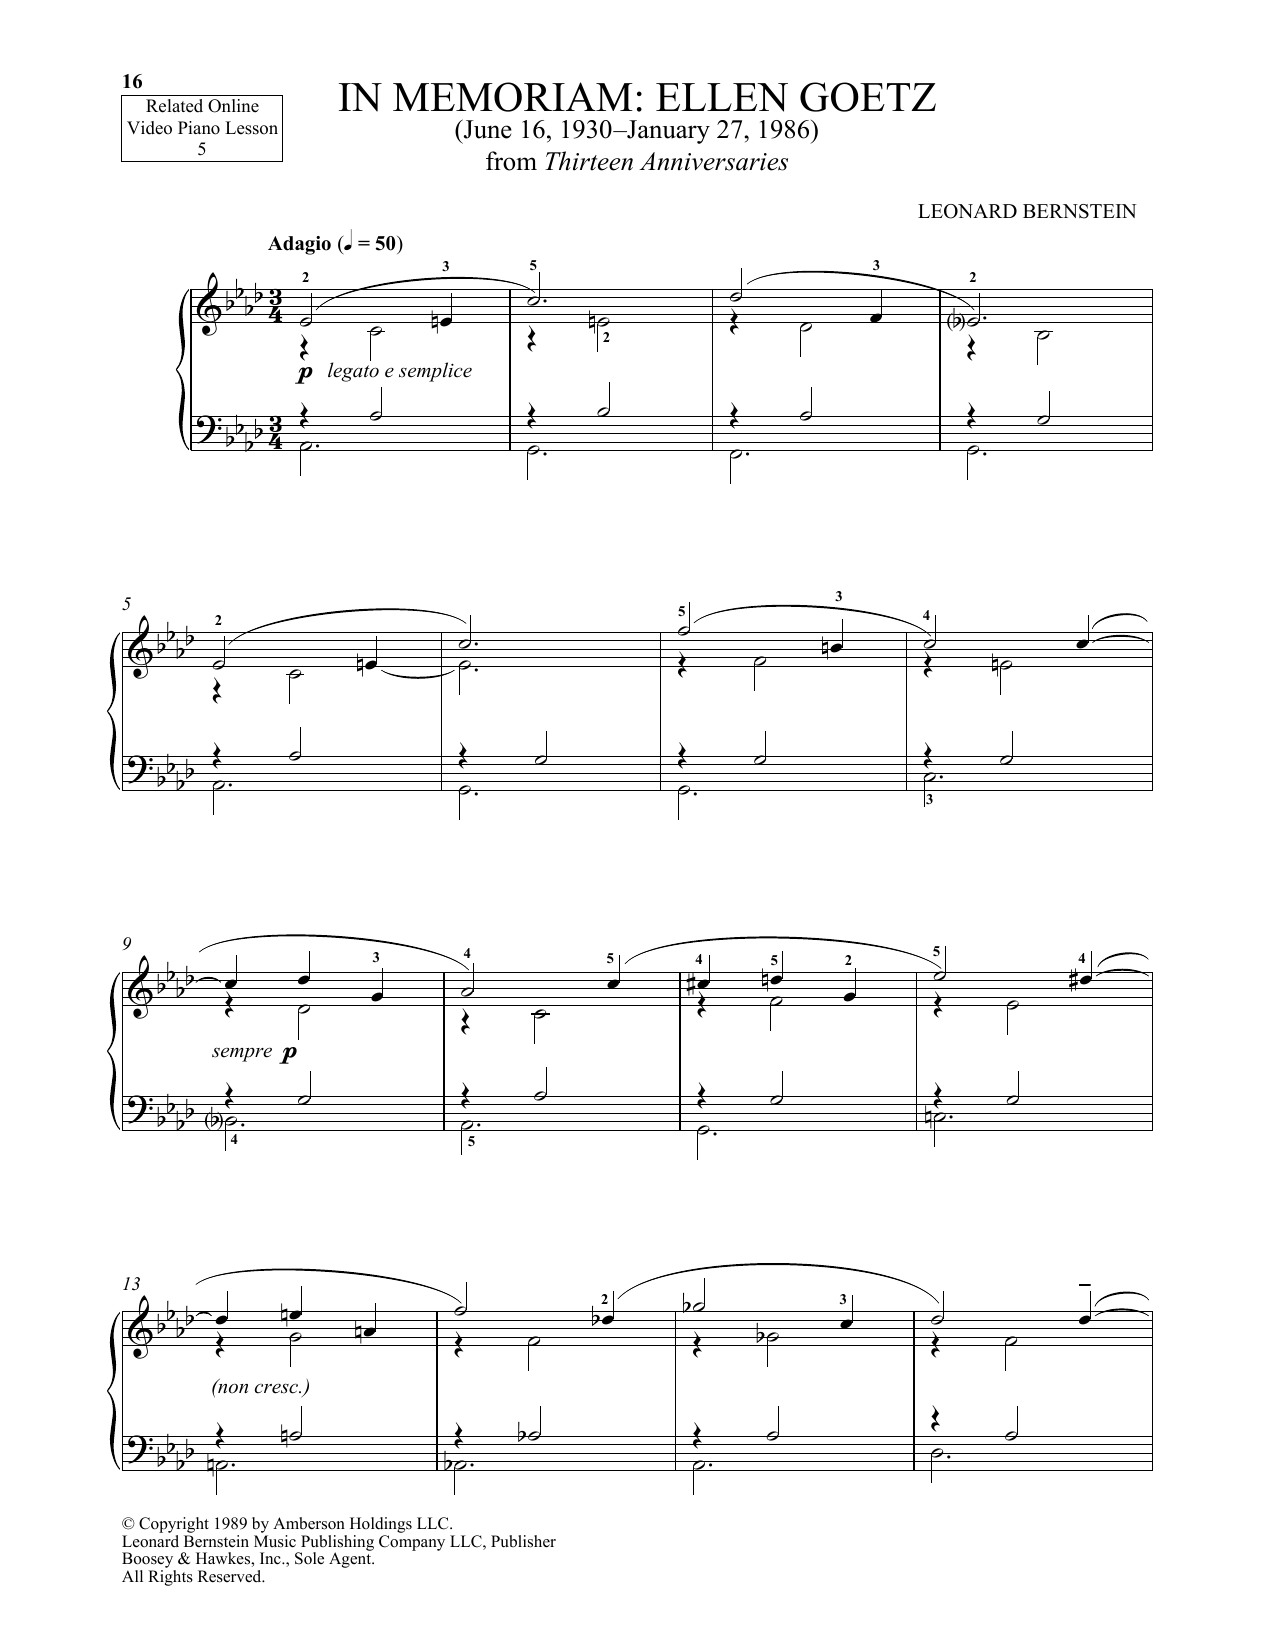 Michael Mizrahi In Memoriam: Ellen Goetz Sheet Music Notes & Chords for Piano Solo - Download or Print PDF